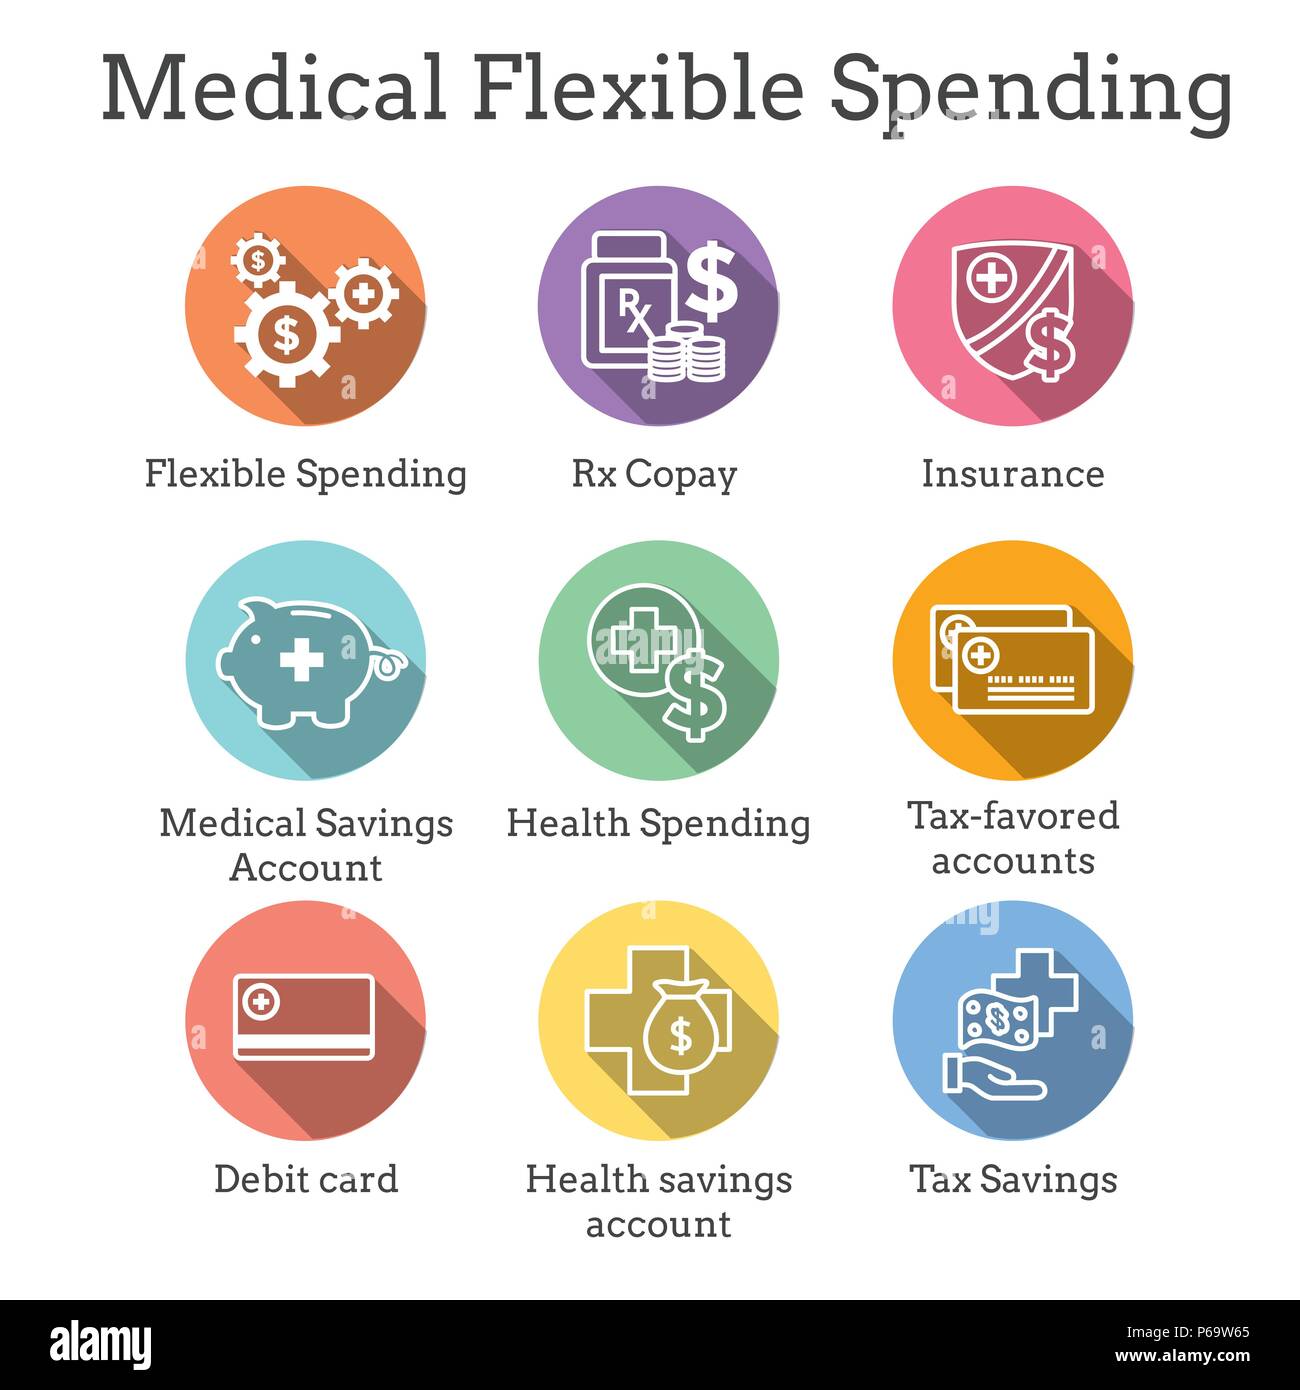 Healthcare Flexible Spending Account – My ACI Benefits